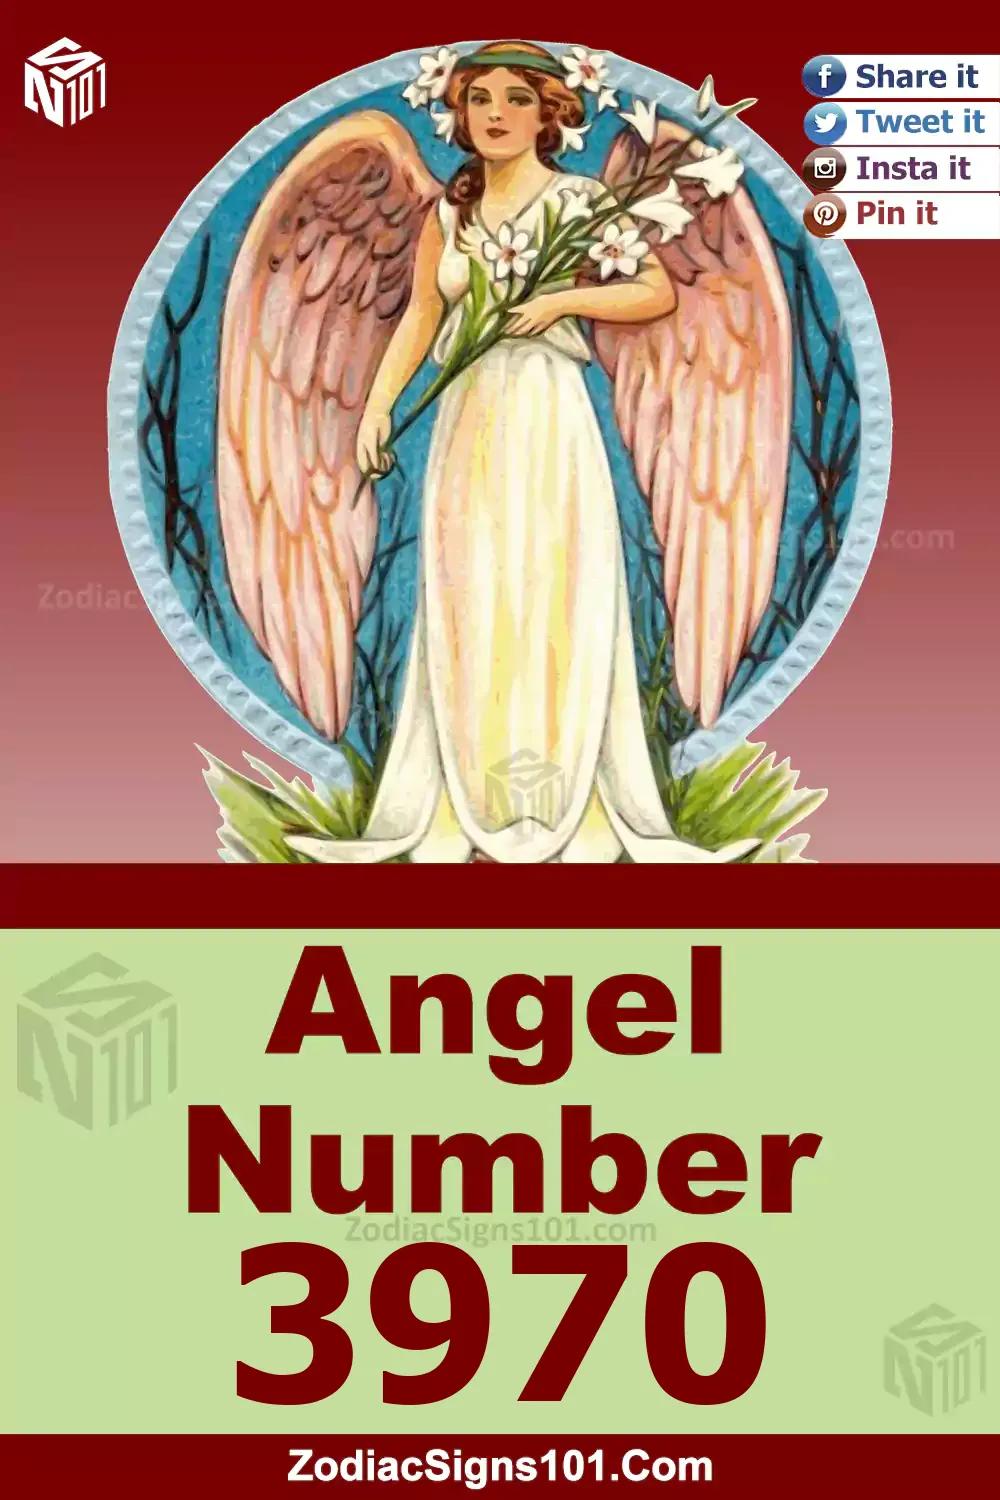 3970-Angel-Number-Meaning.jpg